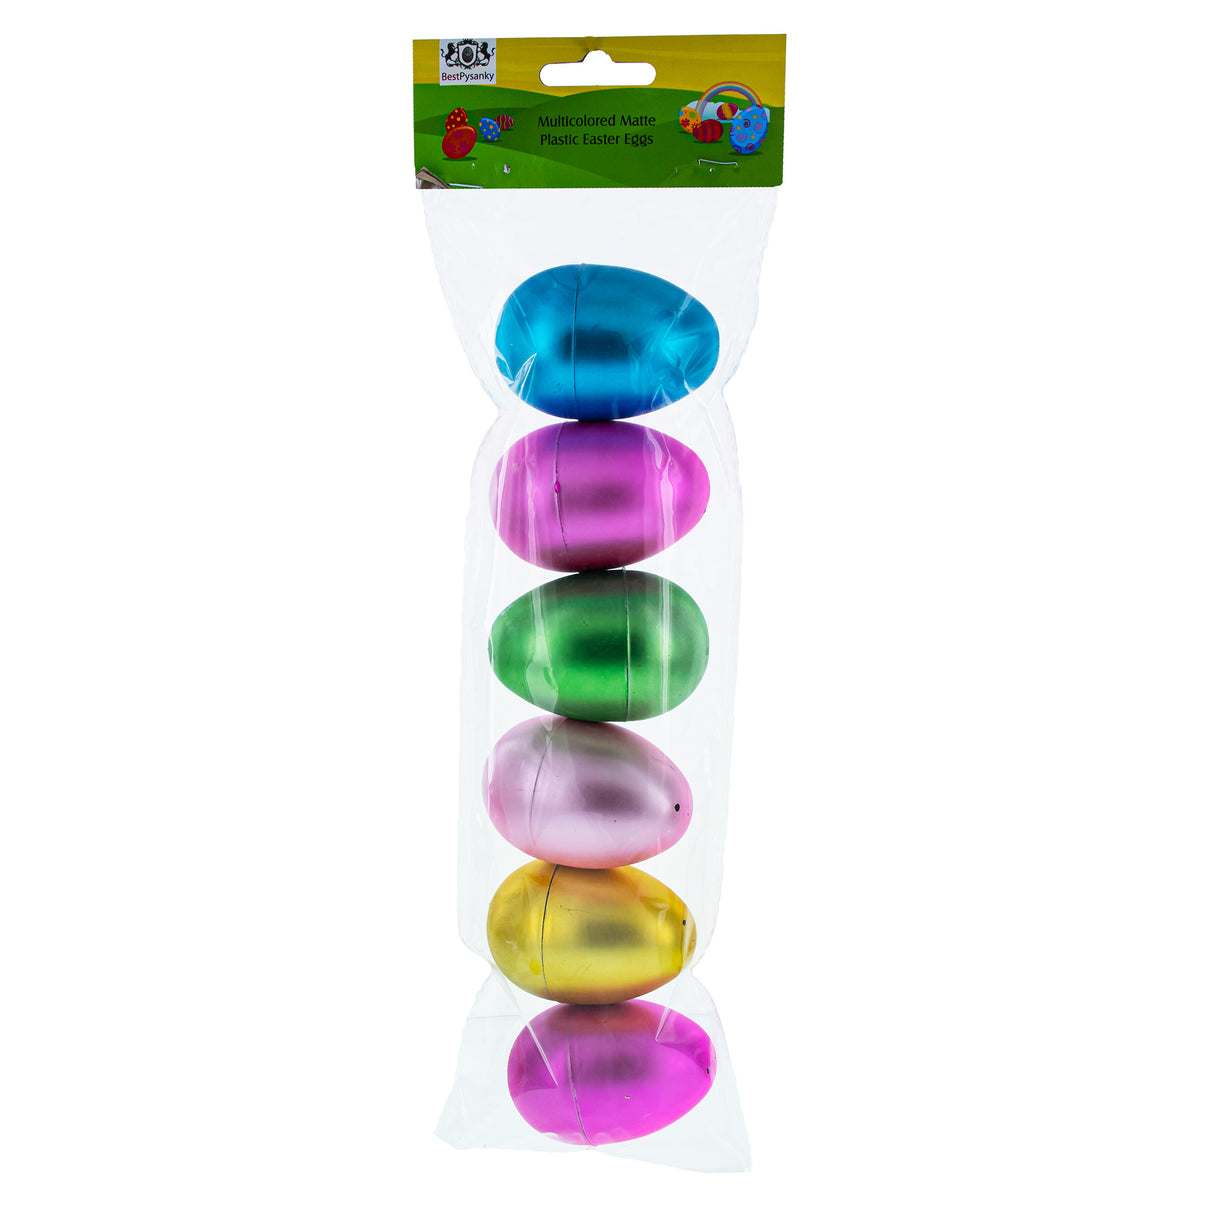 Vibrante paleta de Pascua: Juego de 6 huevos de Pascua grandes de plástico mate multicolor de 3,15 pulgadas